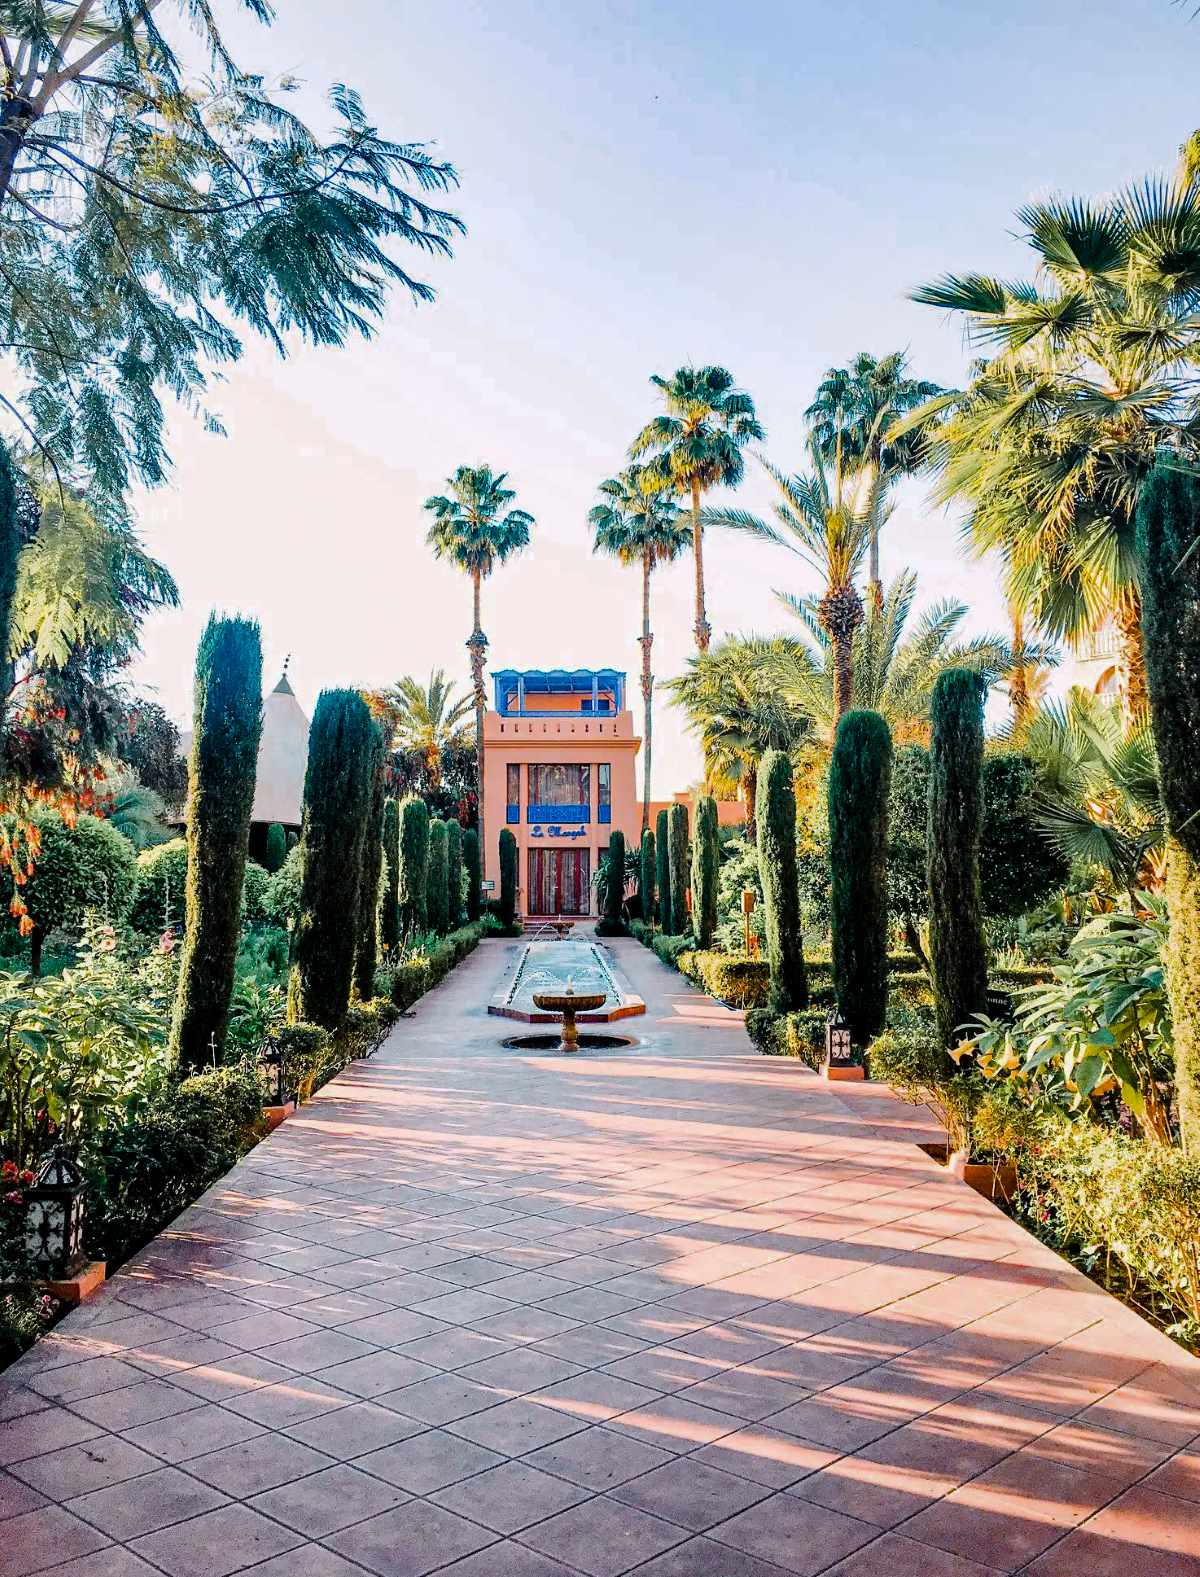 The walkway into Le Meridien Nfis hotel in Marrakech.